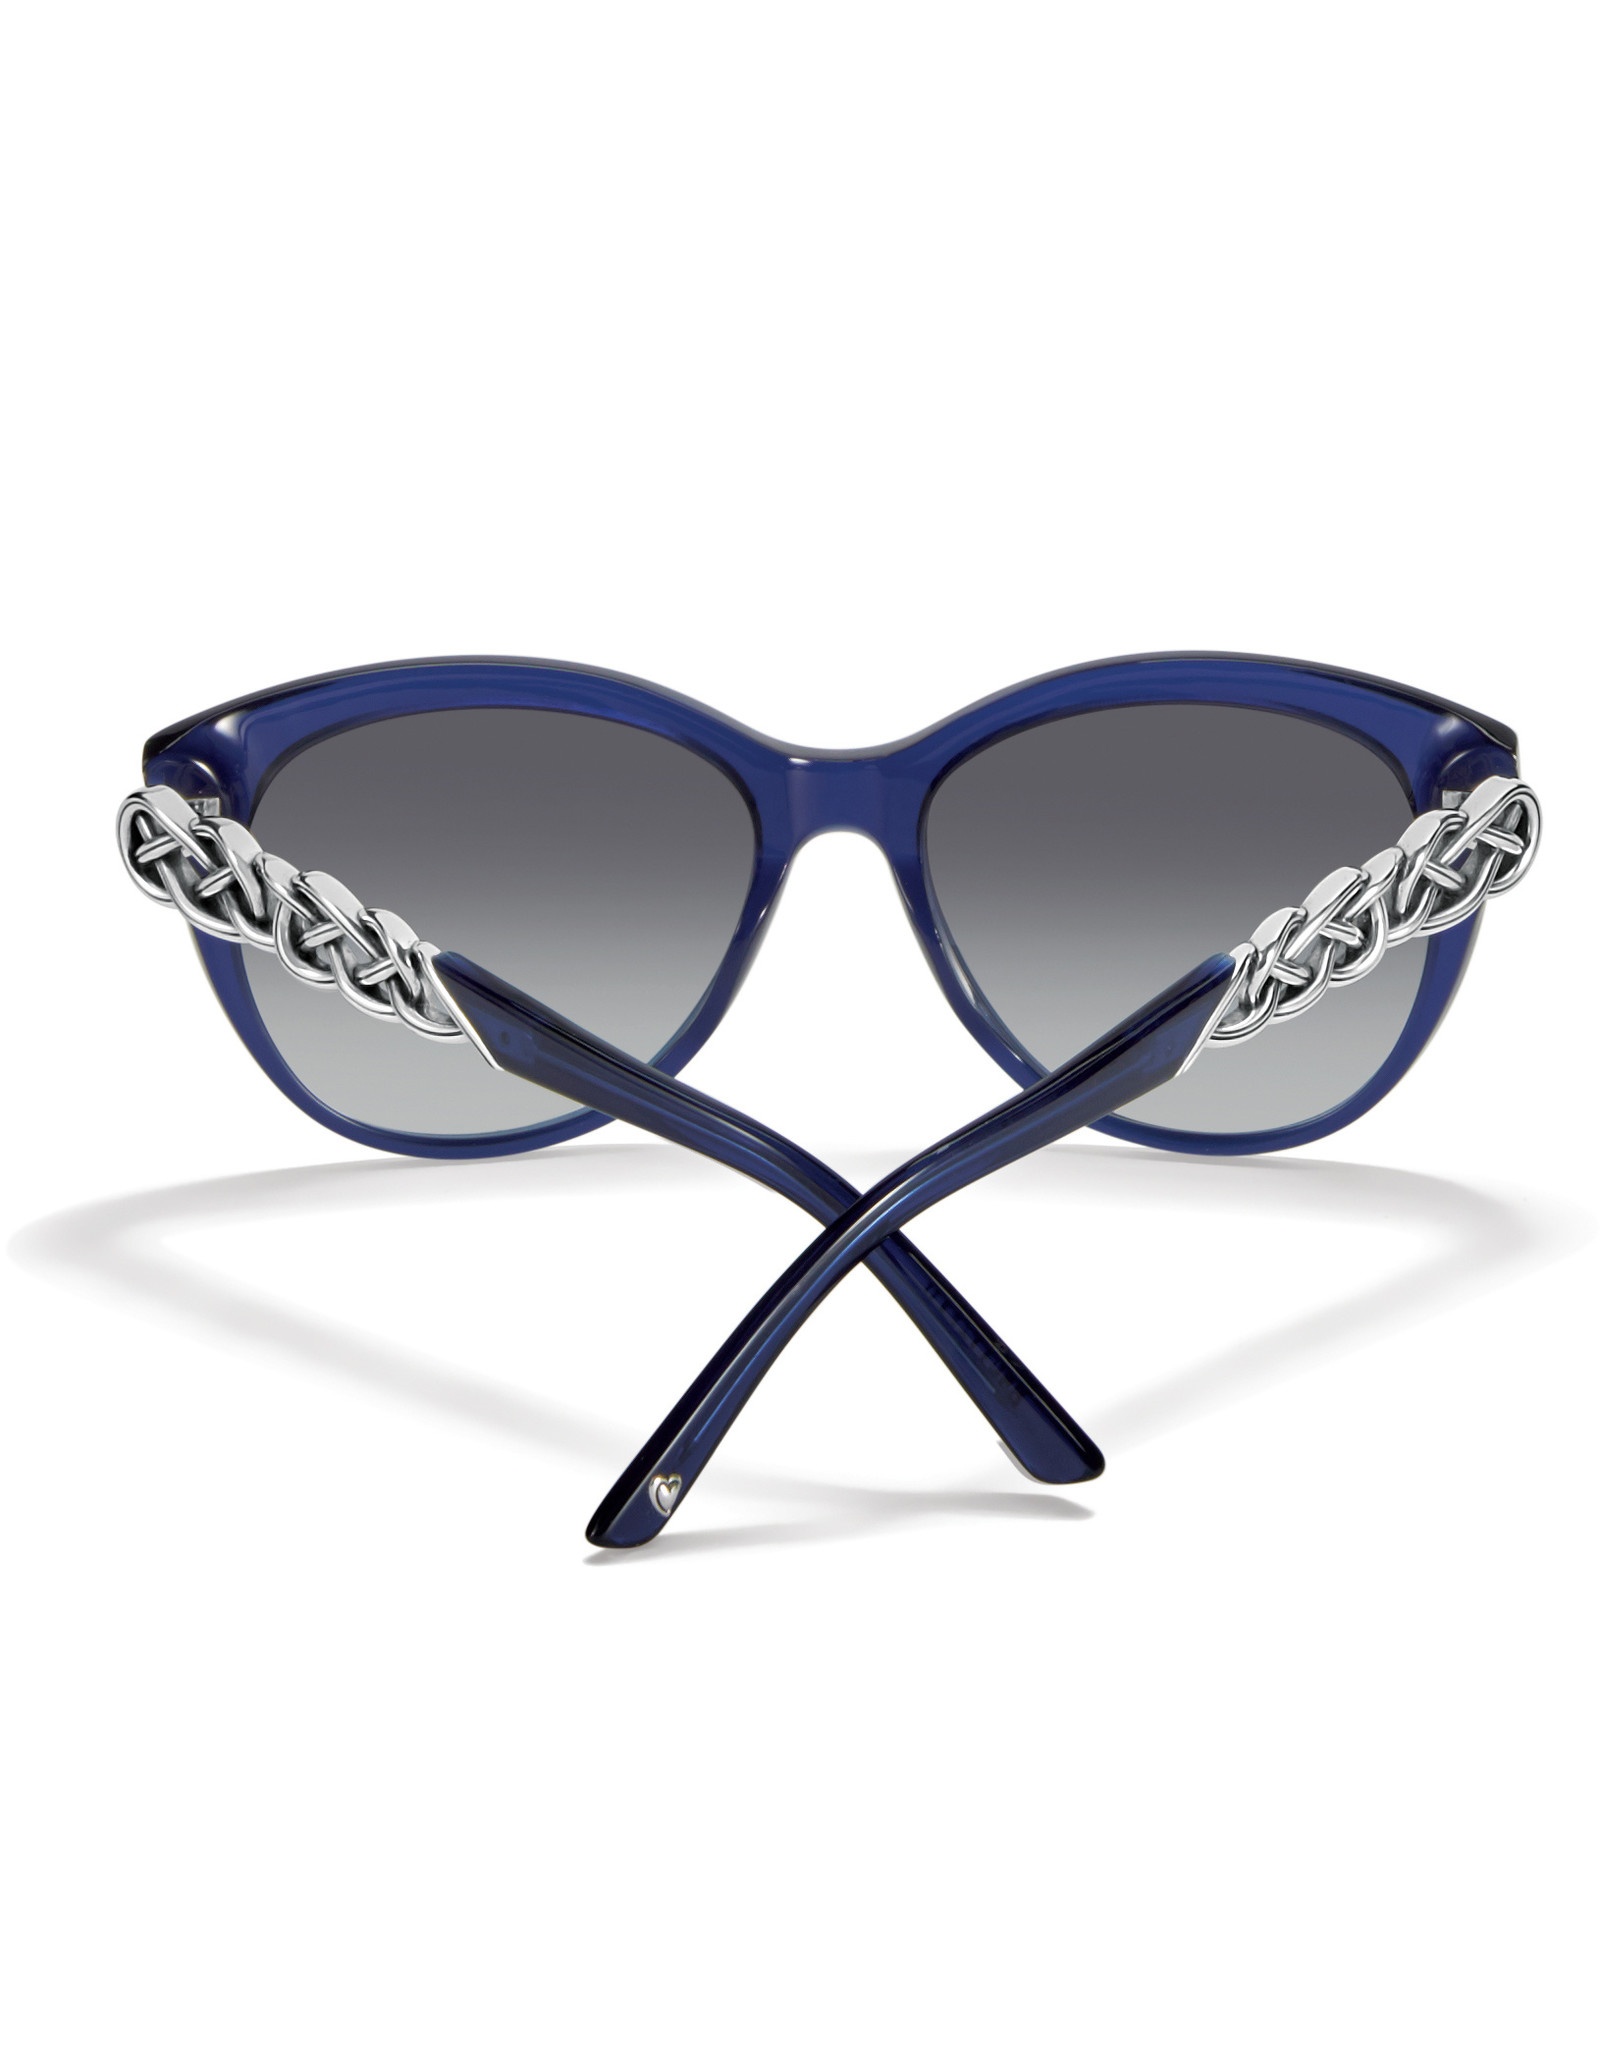 Brighton Brighton A13043 Interlok Braid Blue Sunglasses